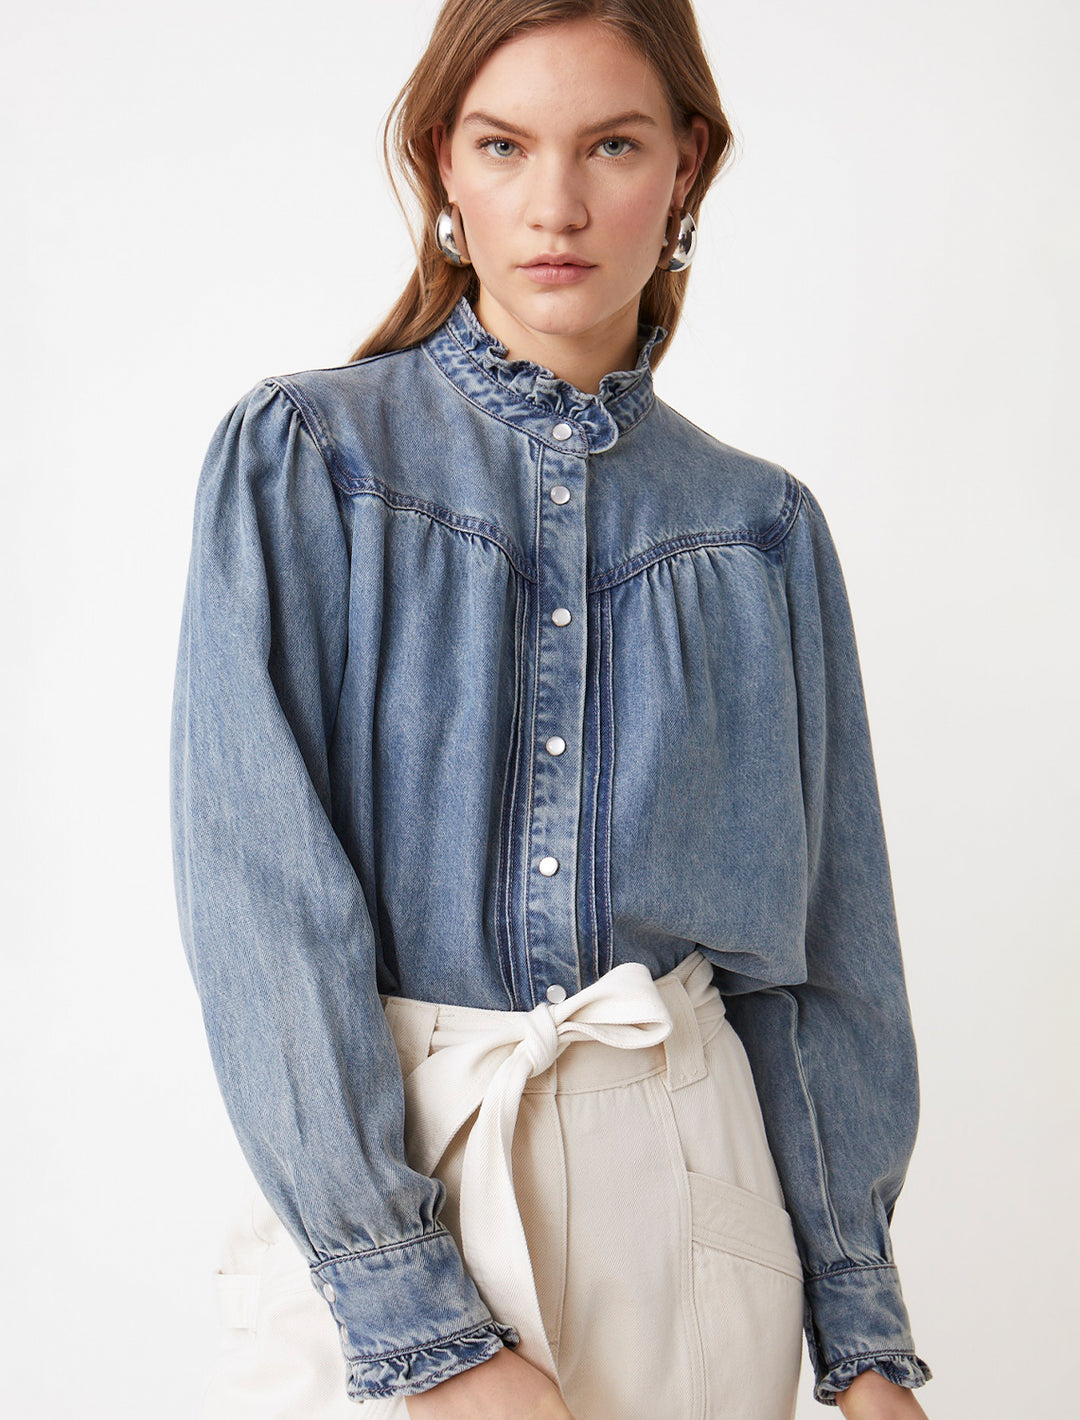 Model wearing Suncoo Paris' laura blouse in bleu jean.